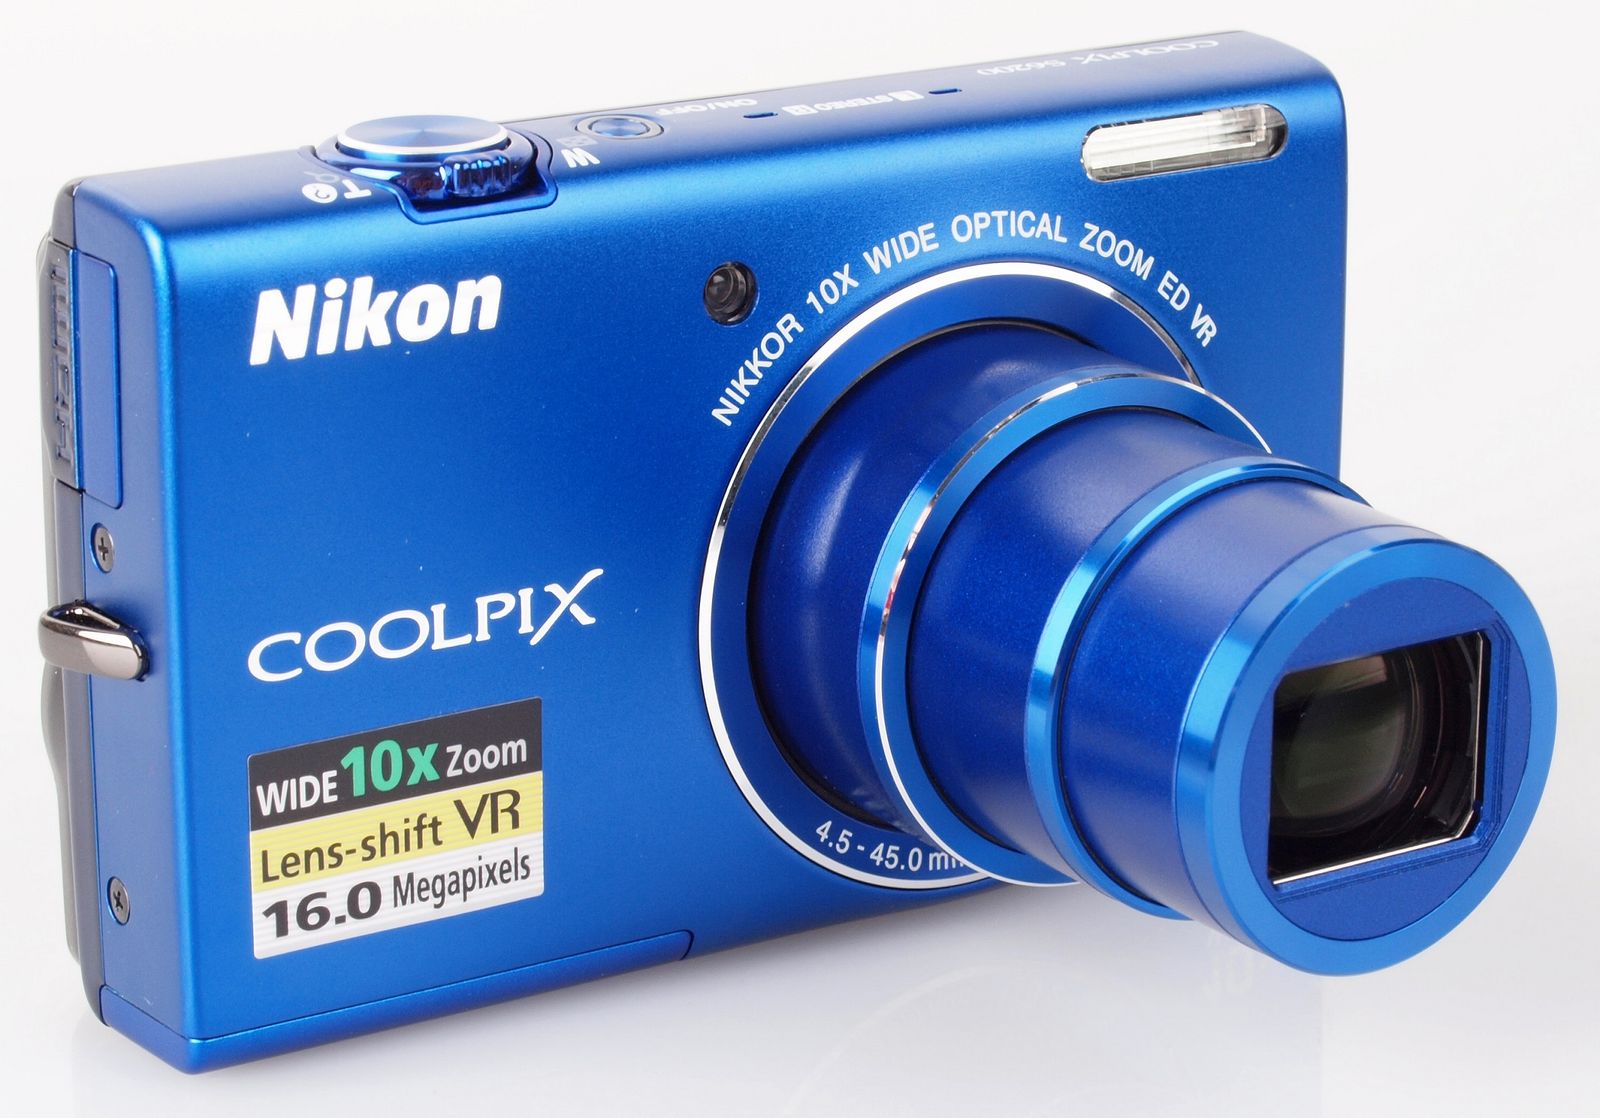 Nikon Coolpix S6200 Digital Compact Camera Review